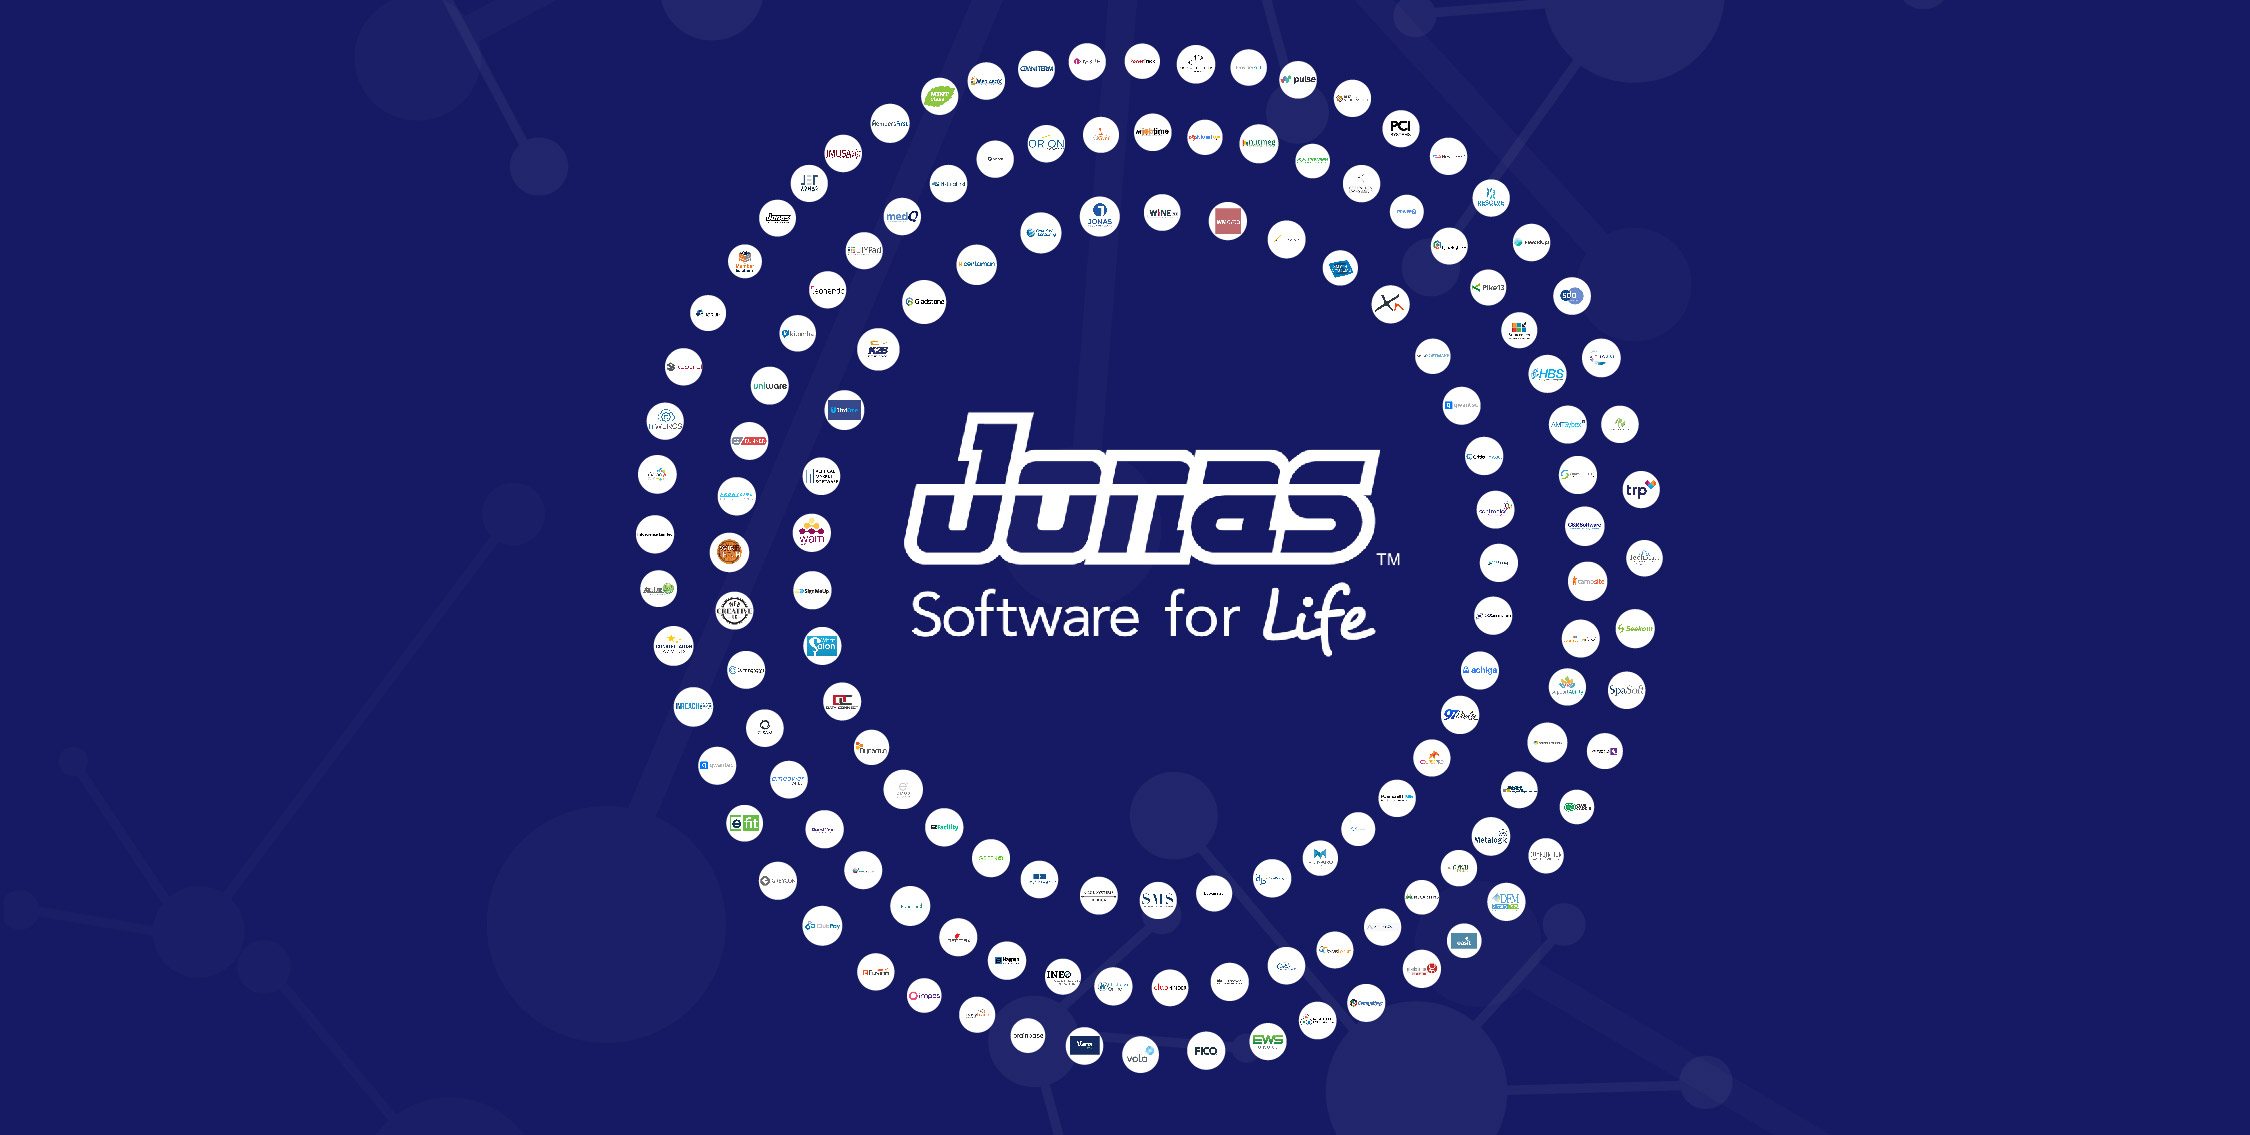 20 Years of Jonas Software Operating Group